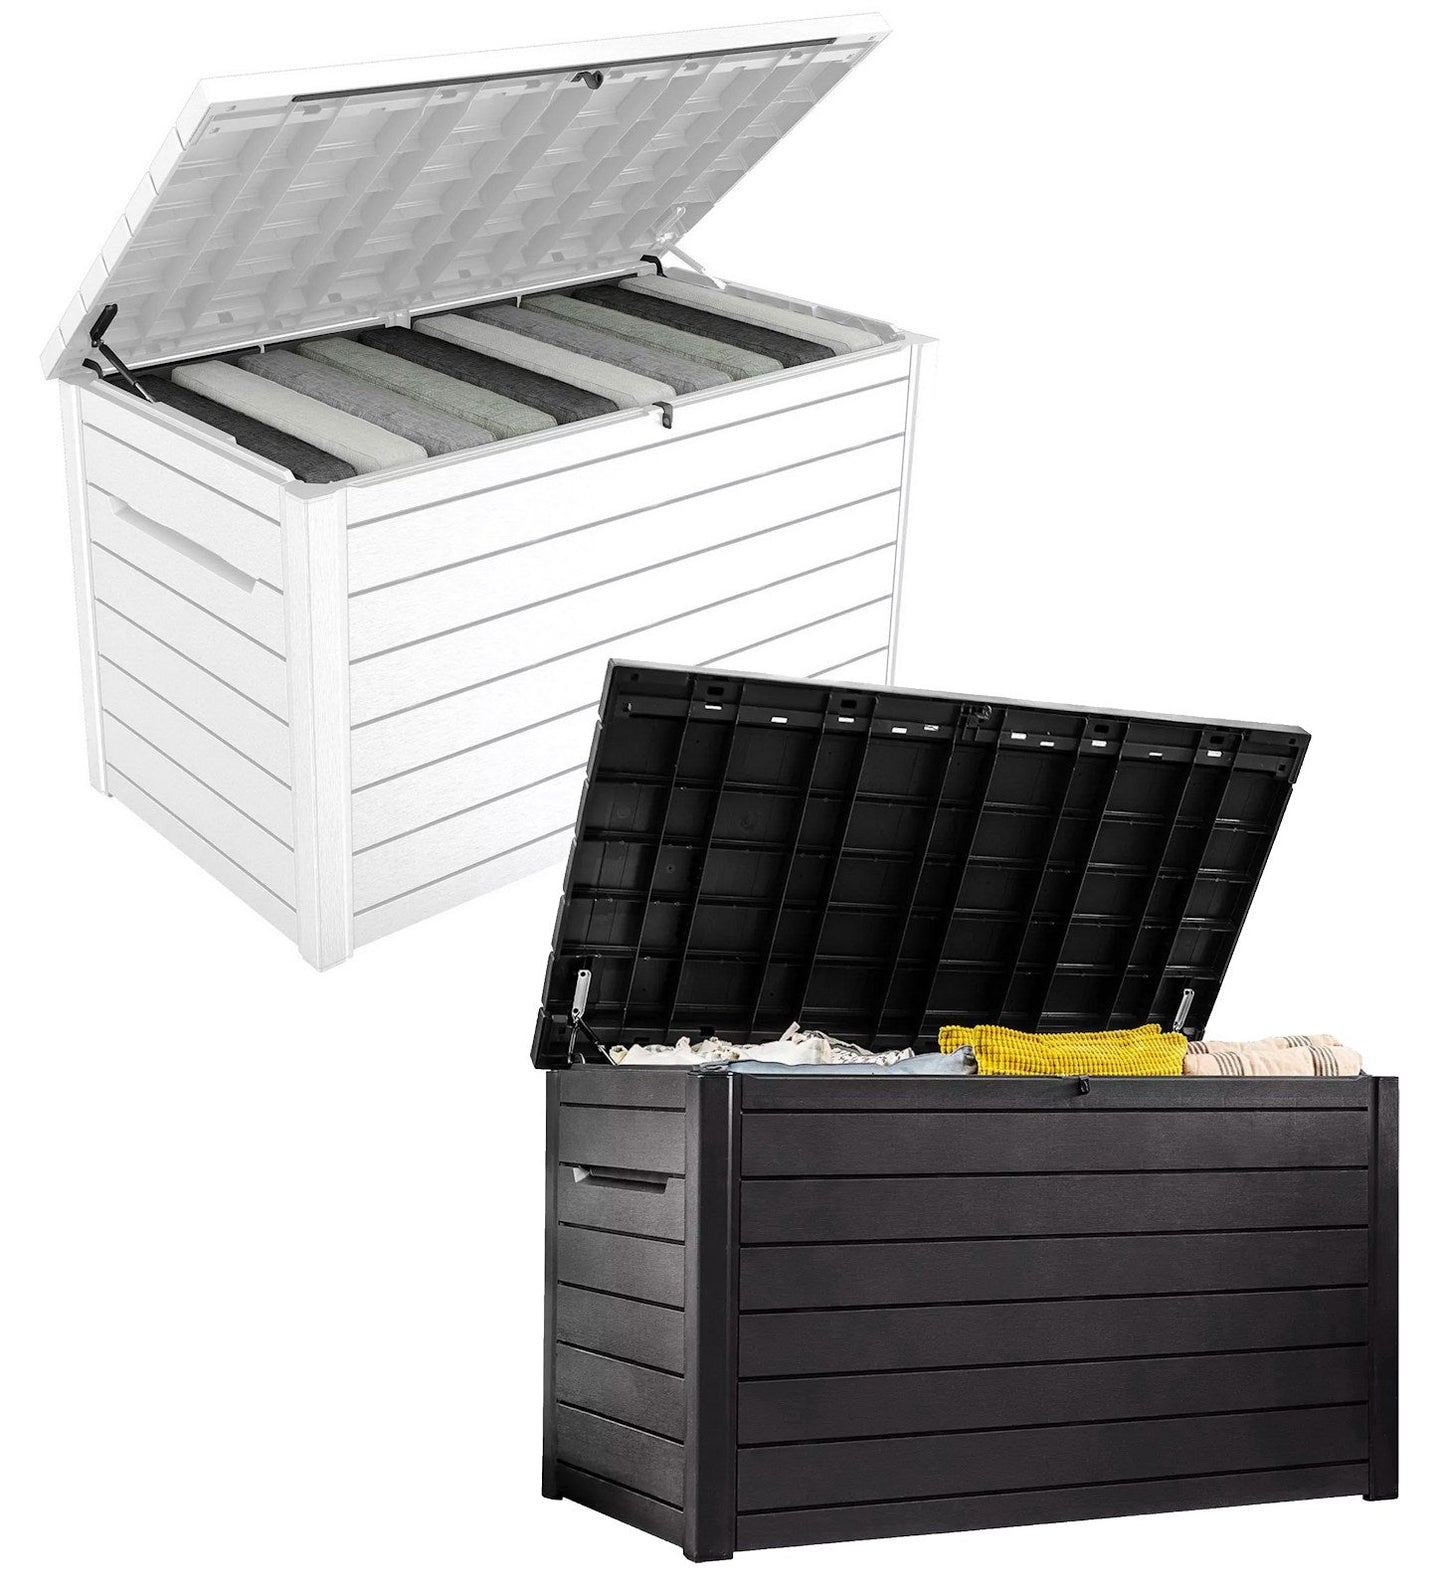 Keter Large 230 Gallon Outdoor Storage Deck Box Patio Weatherproof Resin Plastic